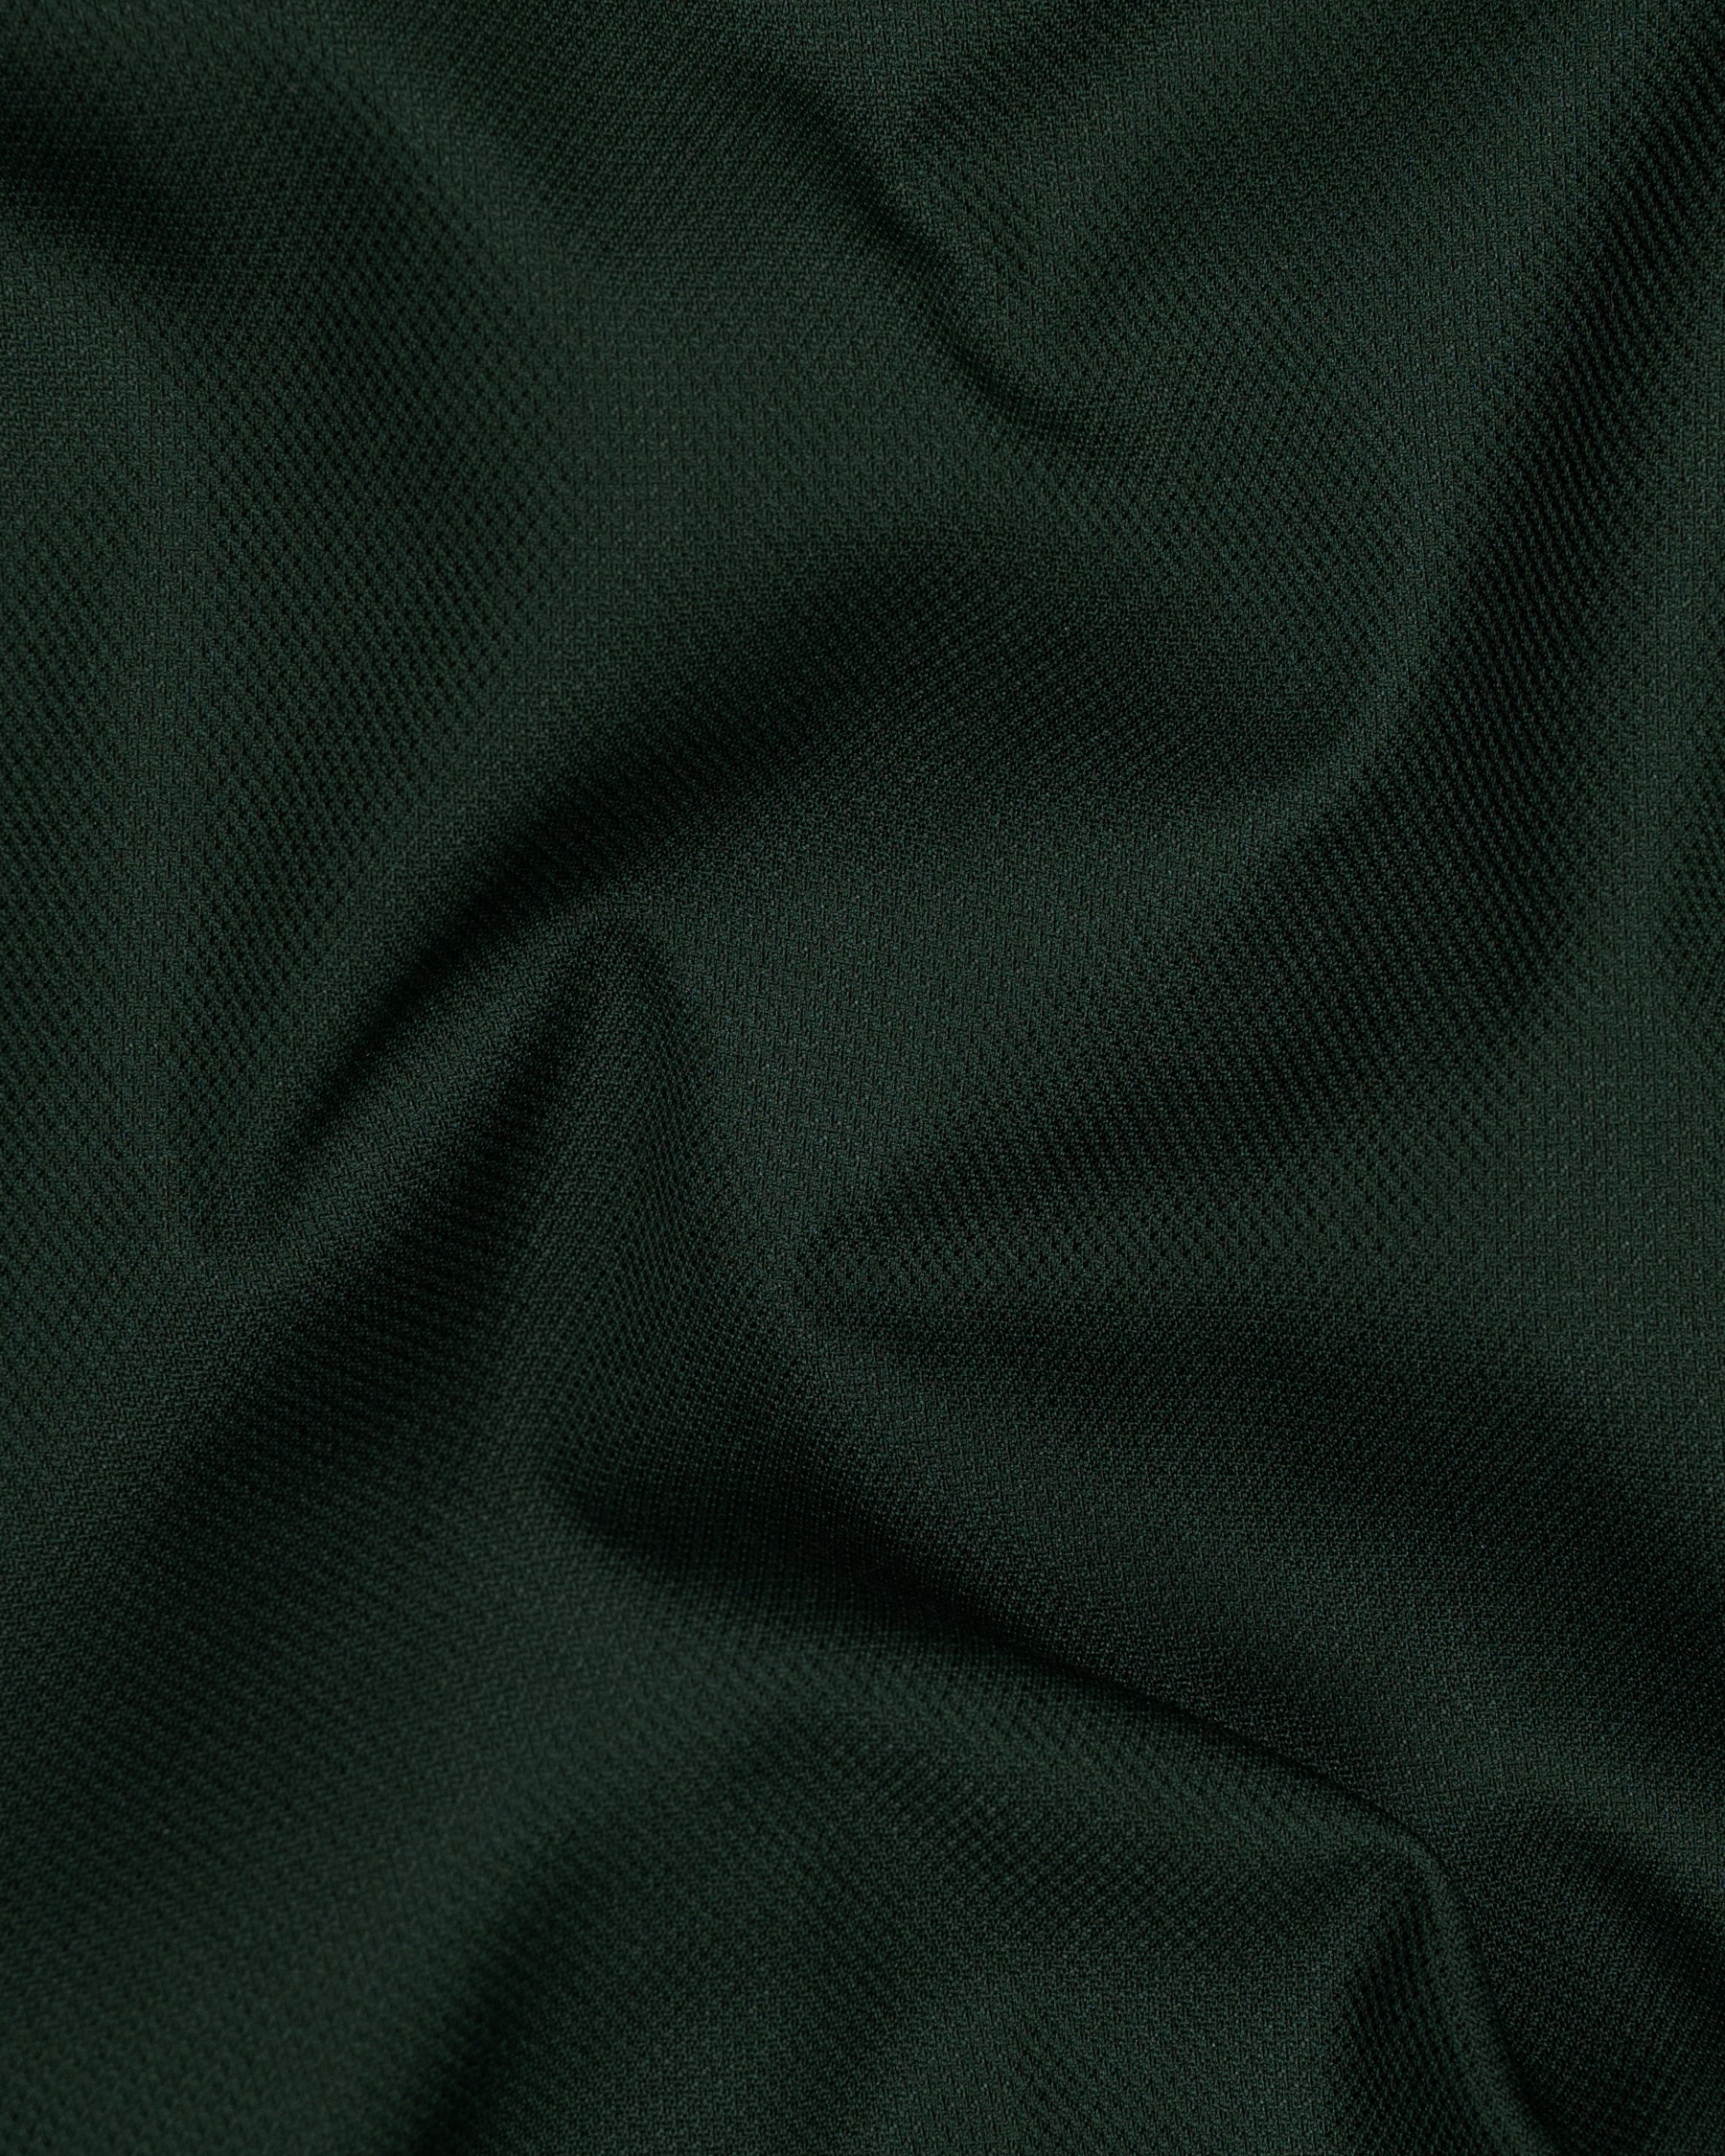 Celtic Green Textured Cross Buttoned Bandhgala Wool Rich Suit ST1404-CBG-36, ST1404-CBG-38, ST1404-CBG-40, ST1404-CBG-42, ST1404-CBG-44, ST1404-CBG-46, ST1404-CBG-48, ST1404-CBG-50, ST1404-CBG-52, ST1404-CBG-54, ST1404-CBG-56, ST1404-CBG-58, ST1404-CBG-60